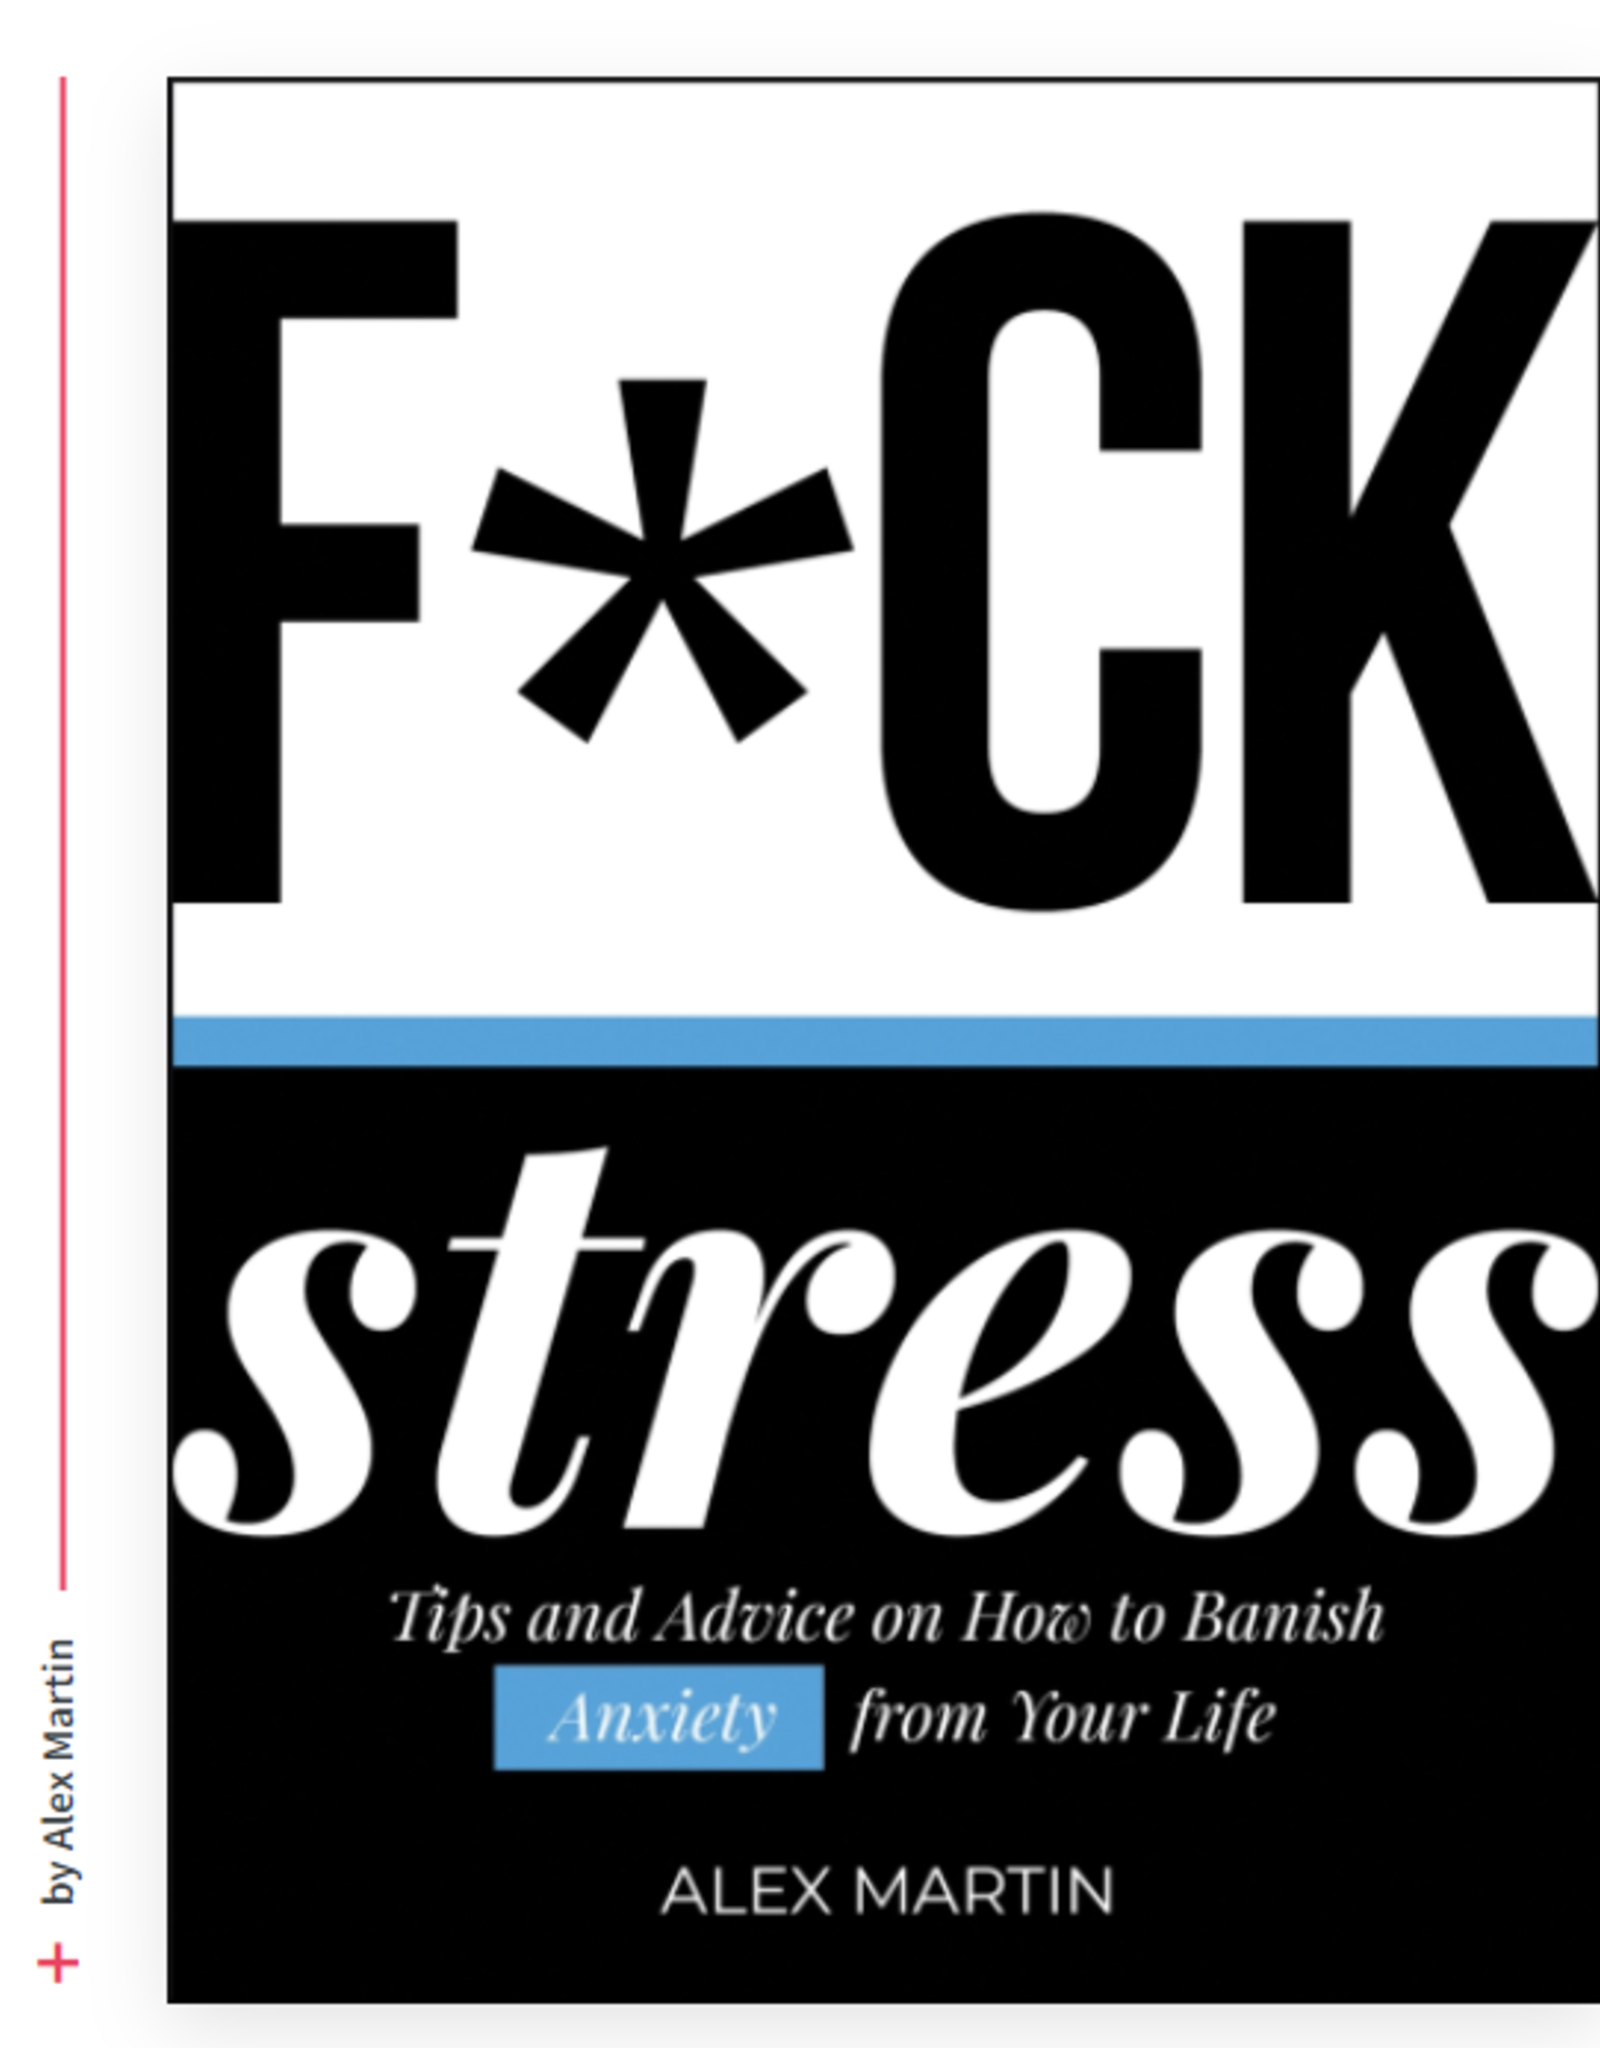 Hachette Book Group F*ck Stress